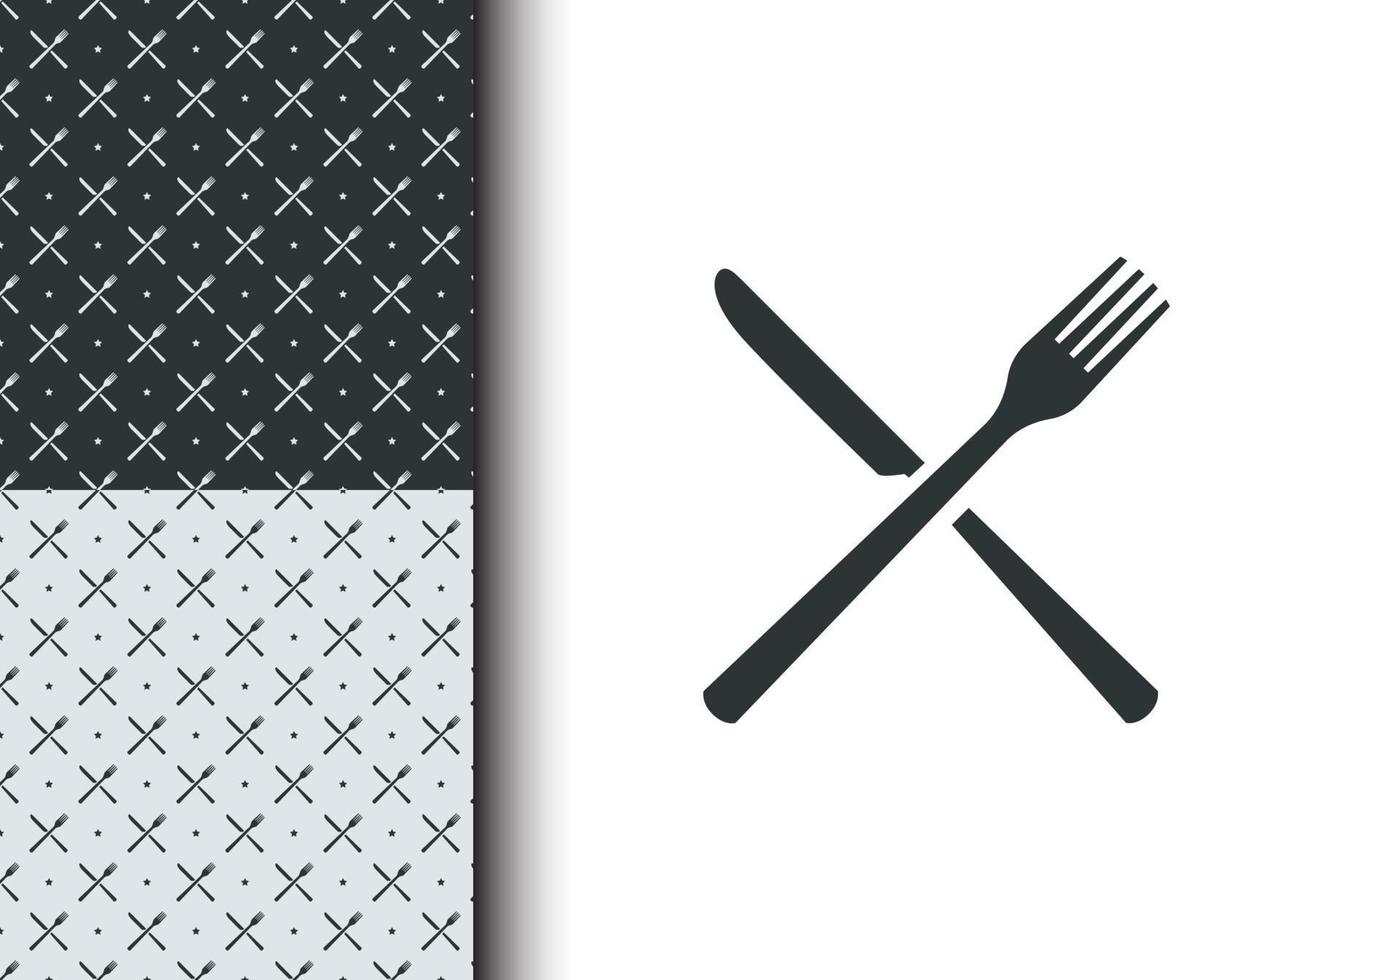 mes en vork attern voor kleding ontwerp, poster achtergrond, kruis voorwerp. naadloos patroon sjabloon. vector eps 10